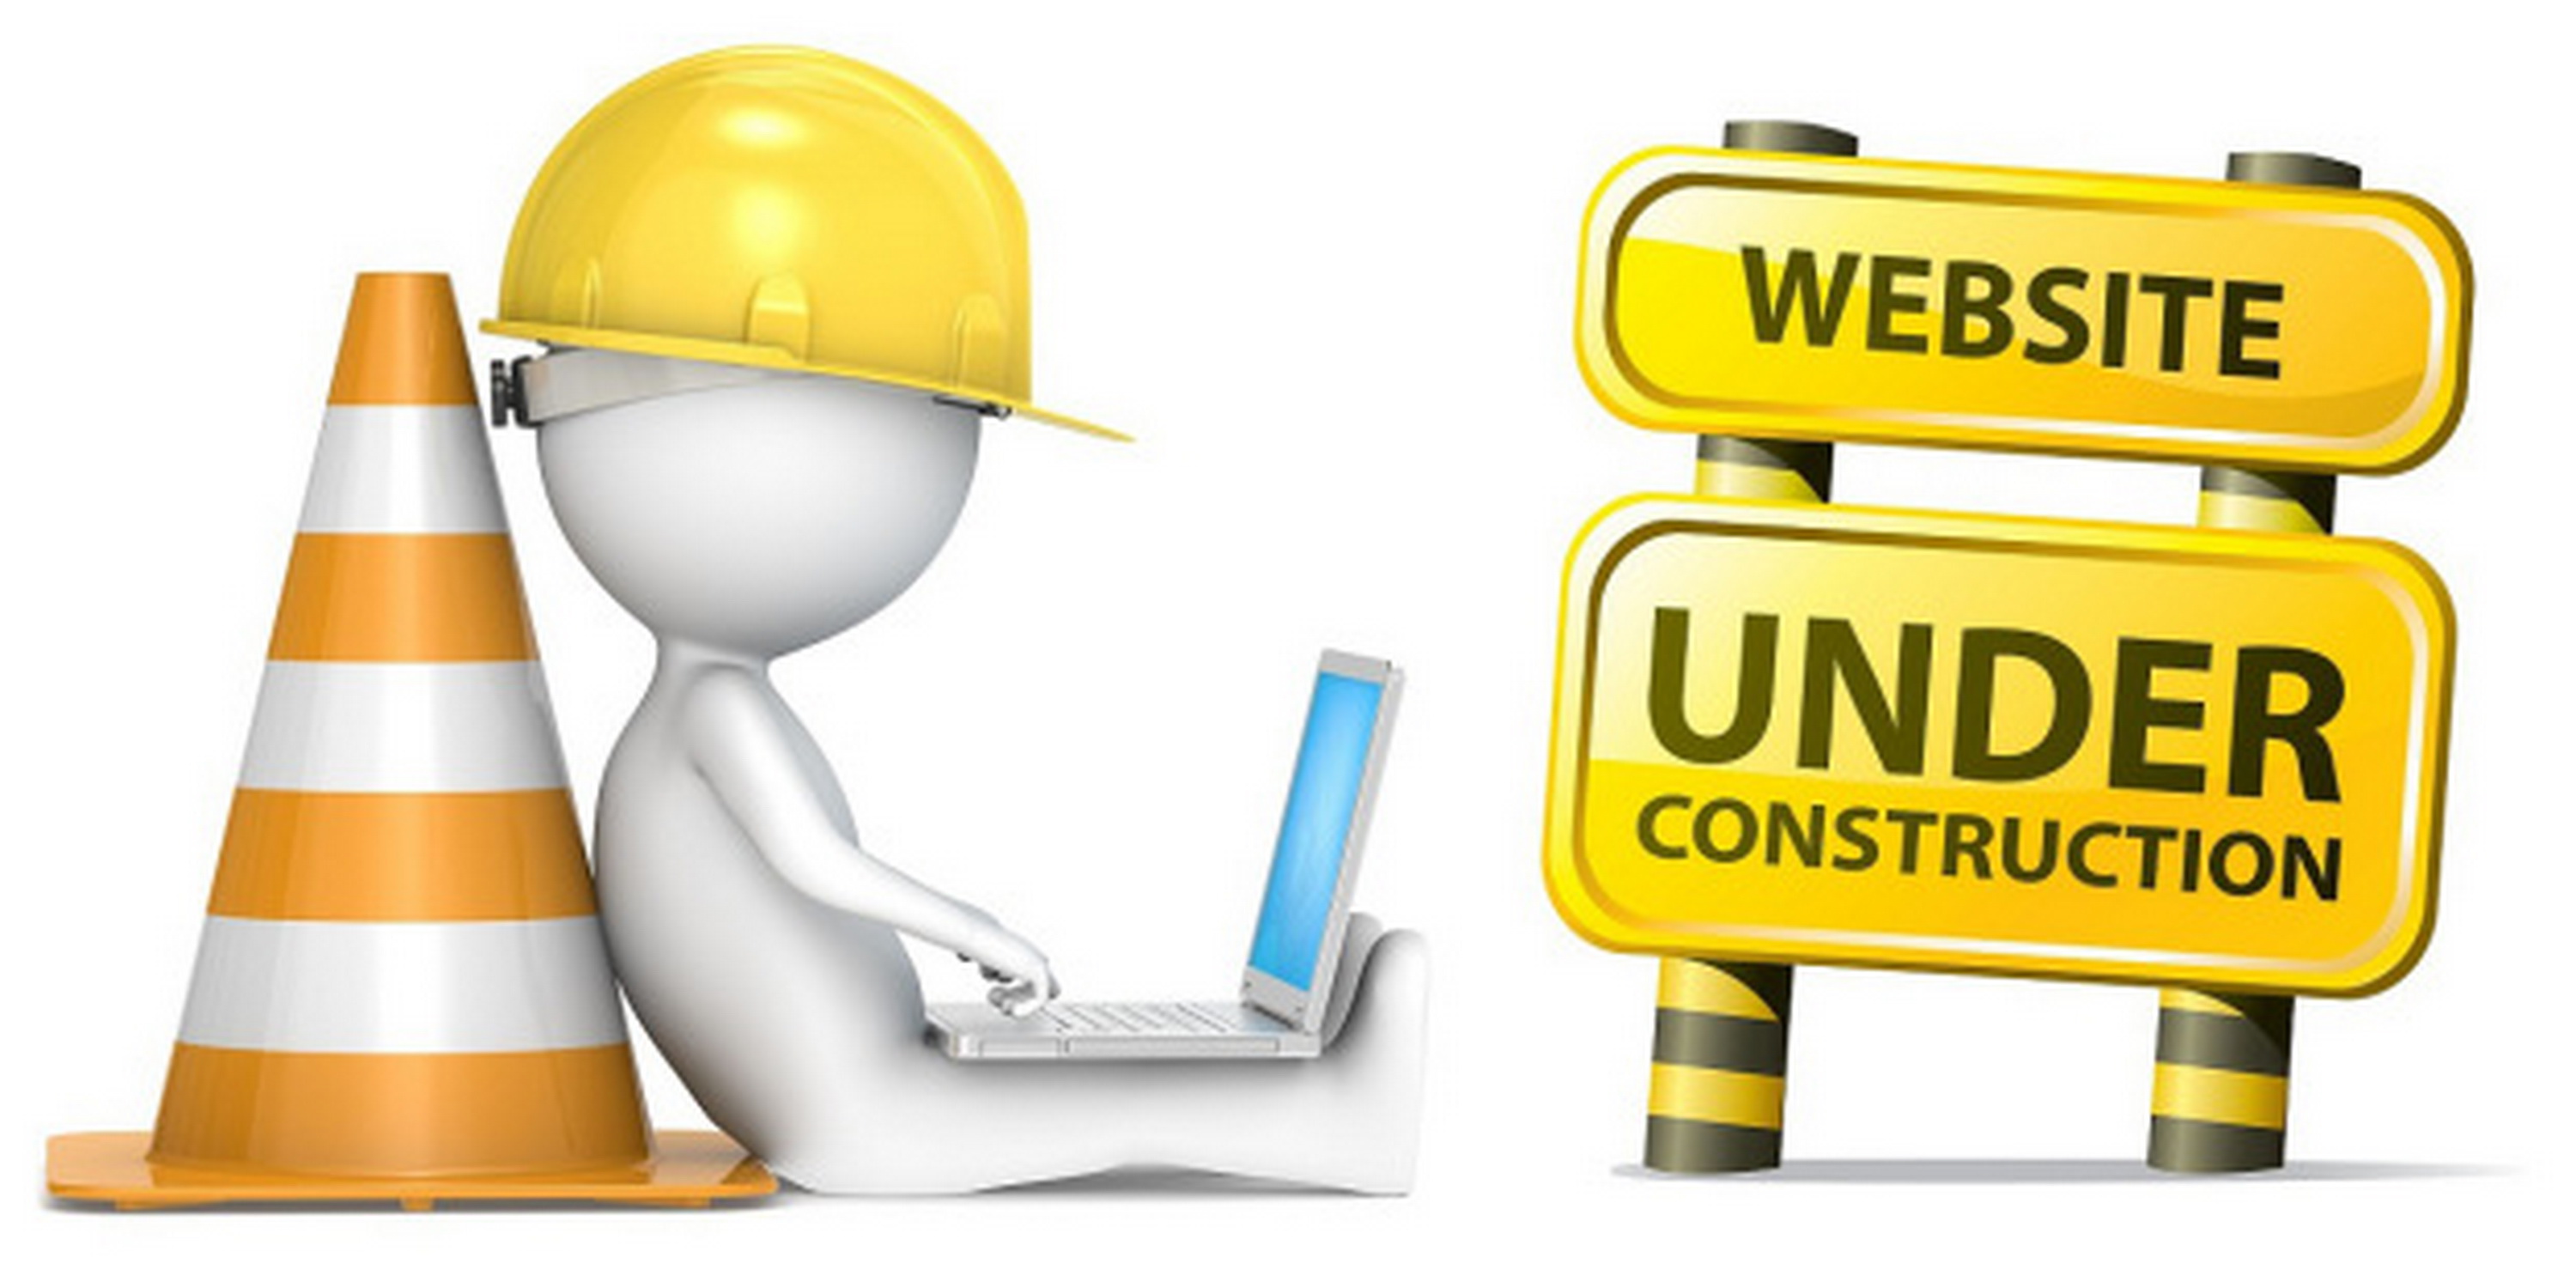 UMUVE Website is Under Construction